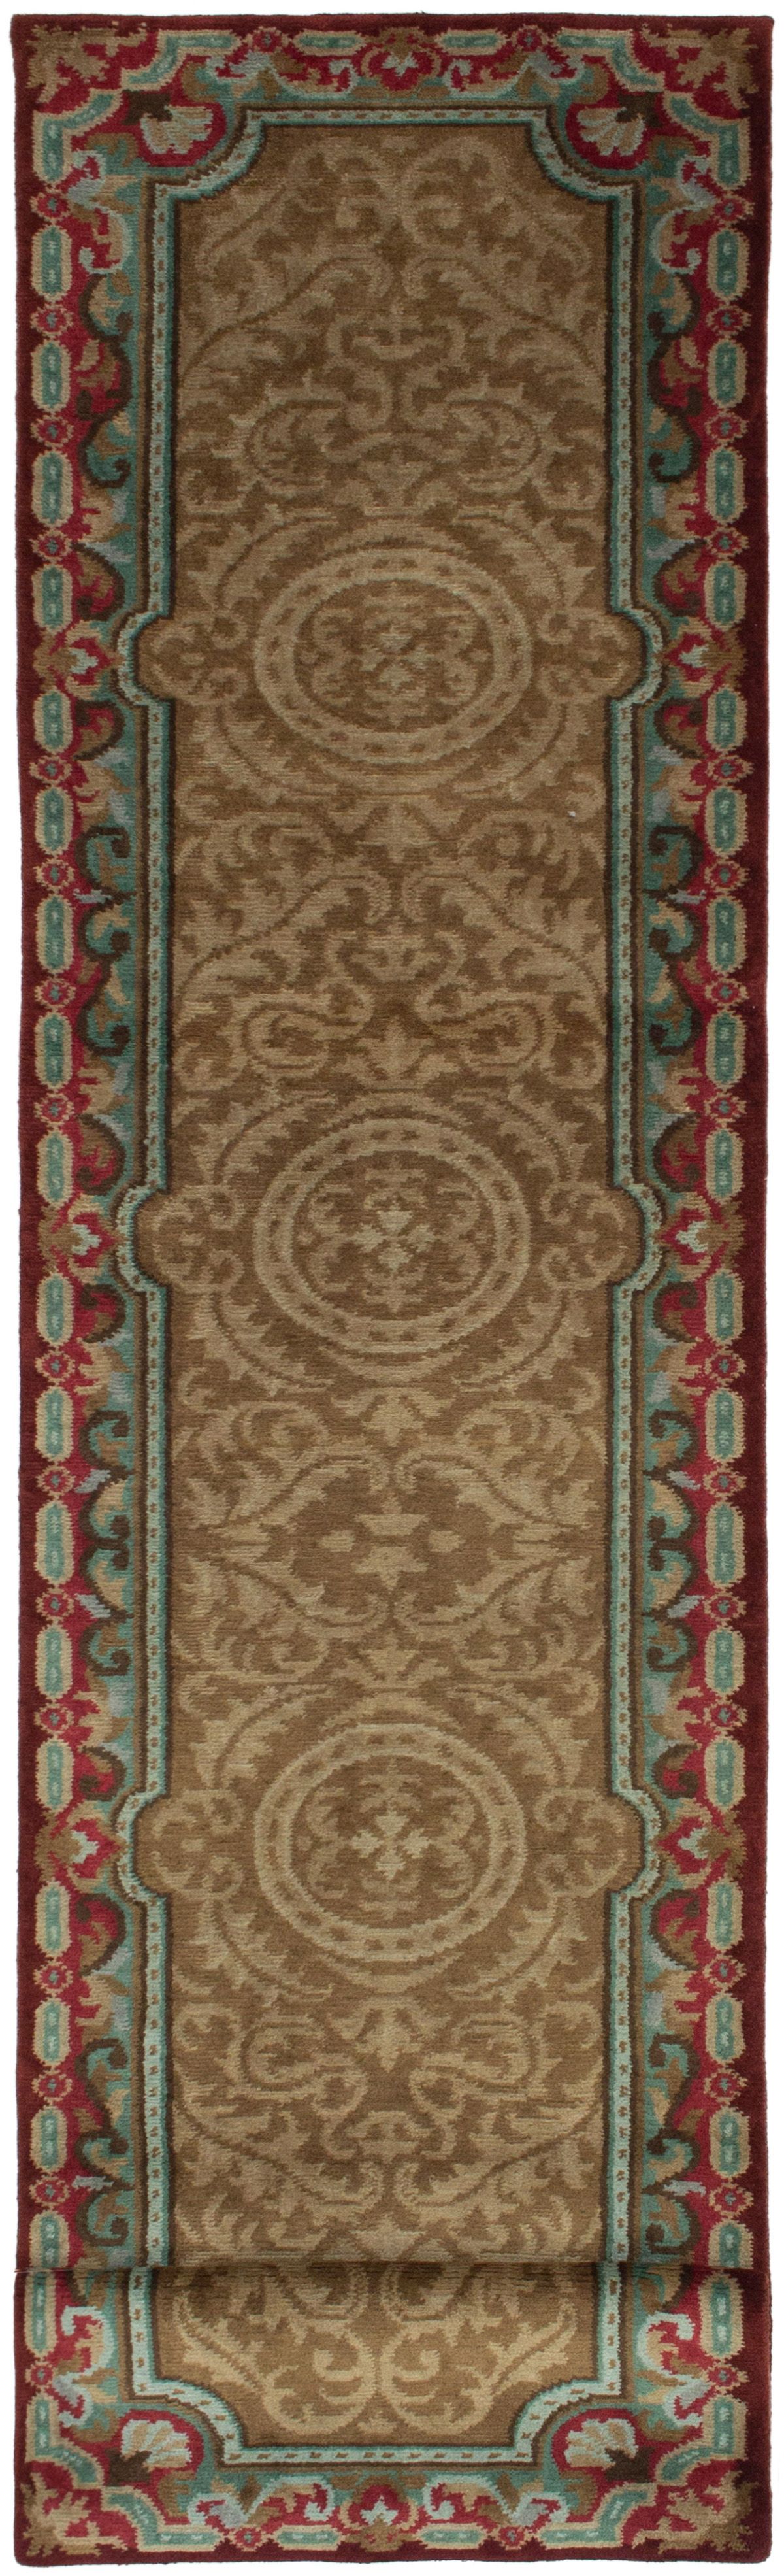 Hand-knotted Kathmandu Tan Wool Rug 2'8" x 11'11" Size: 2'8" x 11'11"  